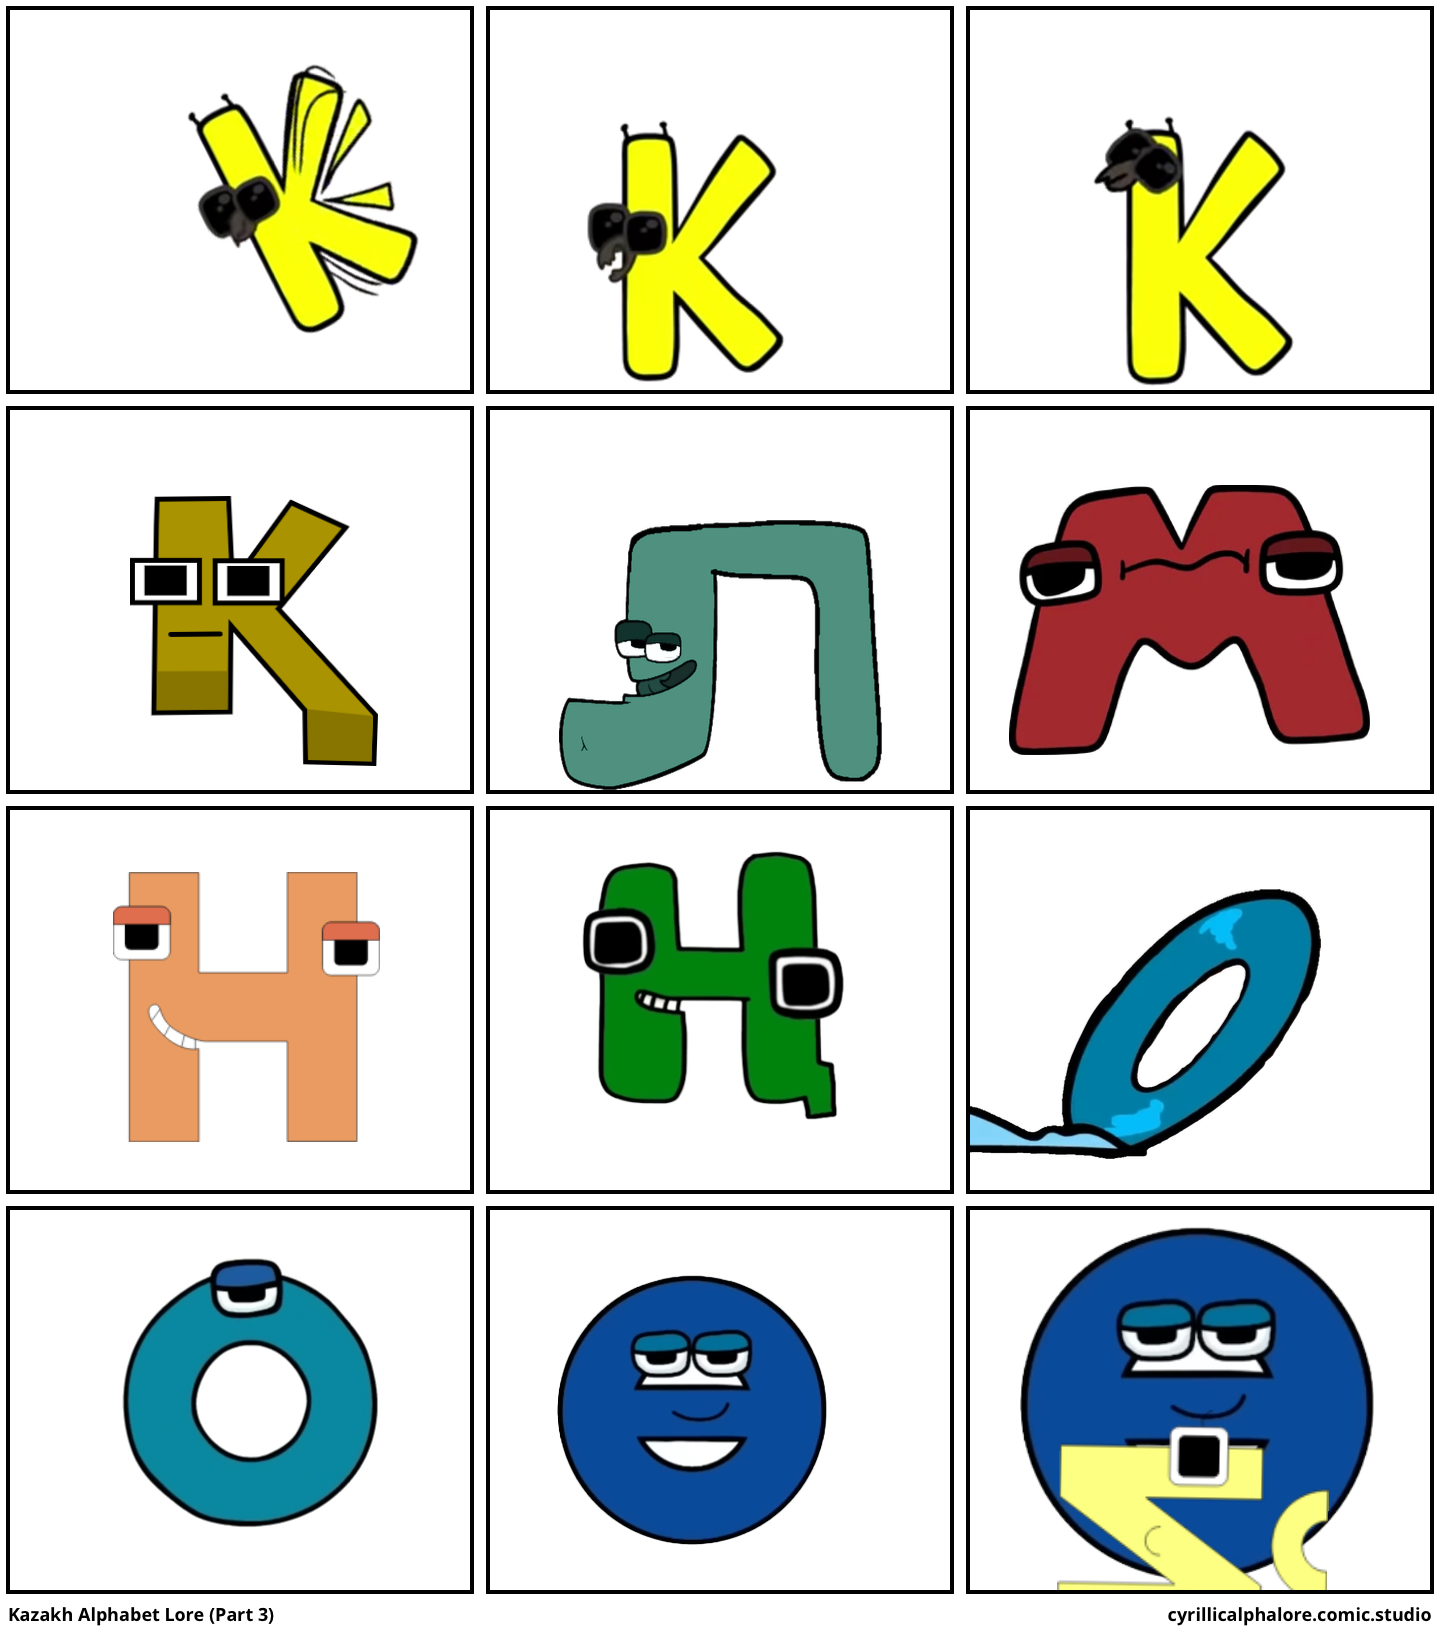 Kazakh Alphabet Lore (Part 3) - Comic Studio